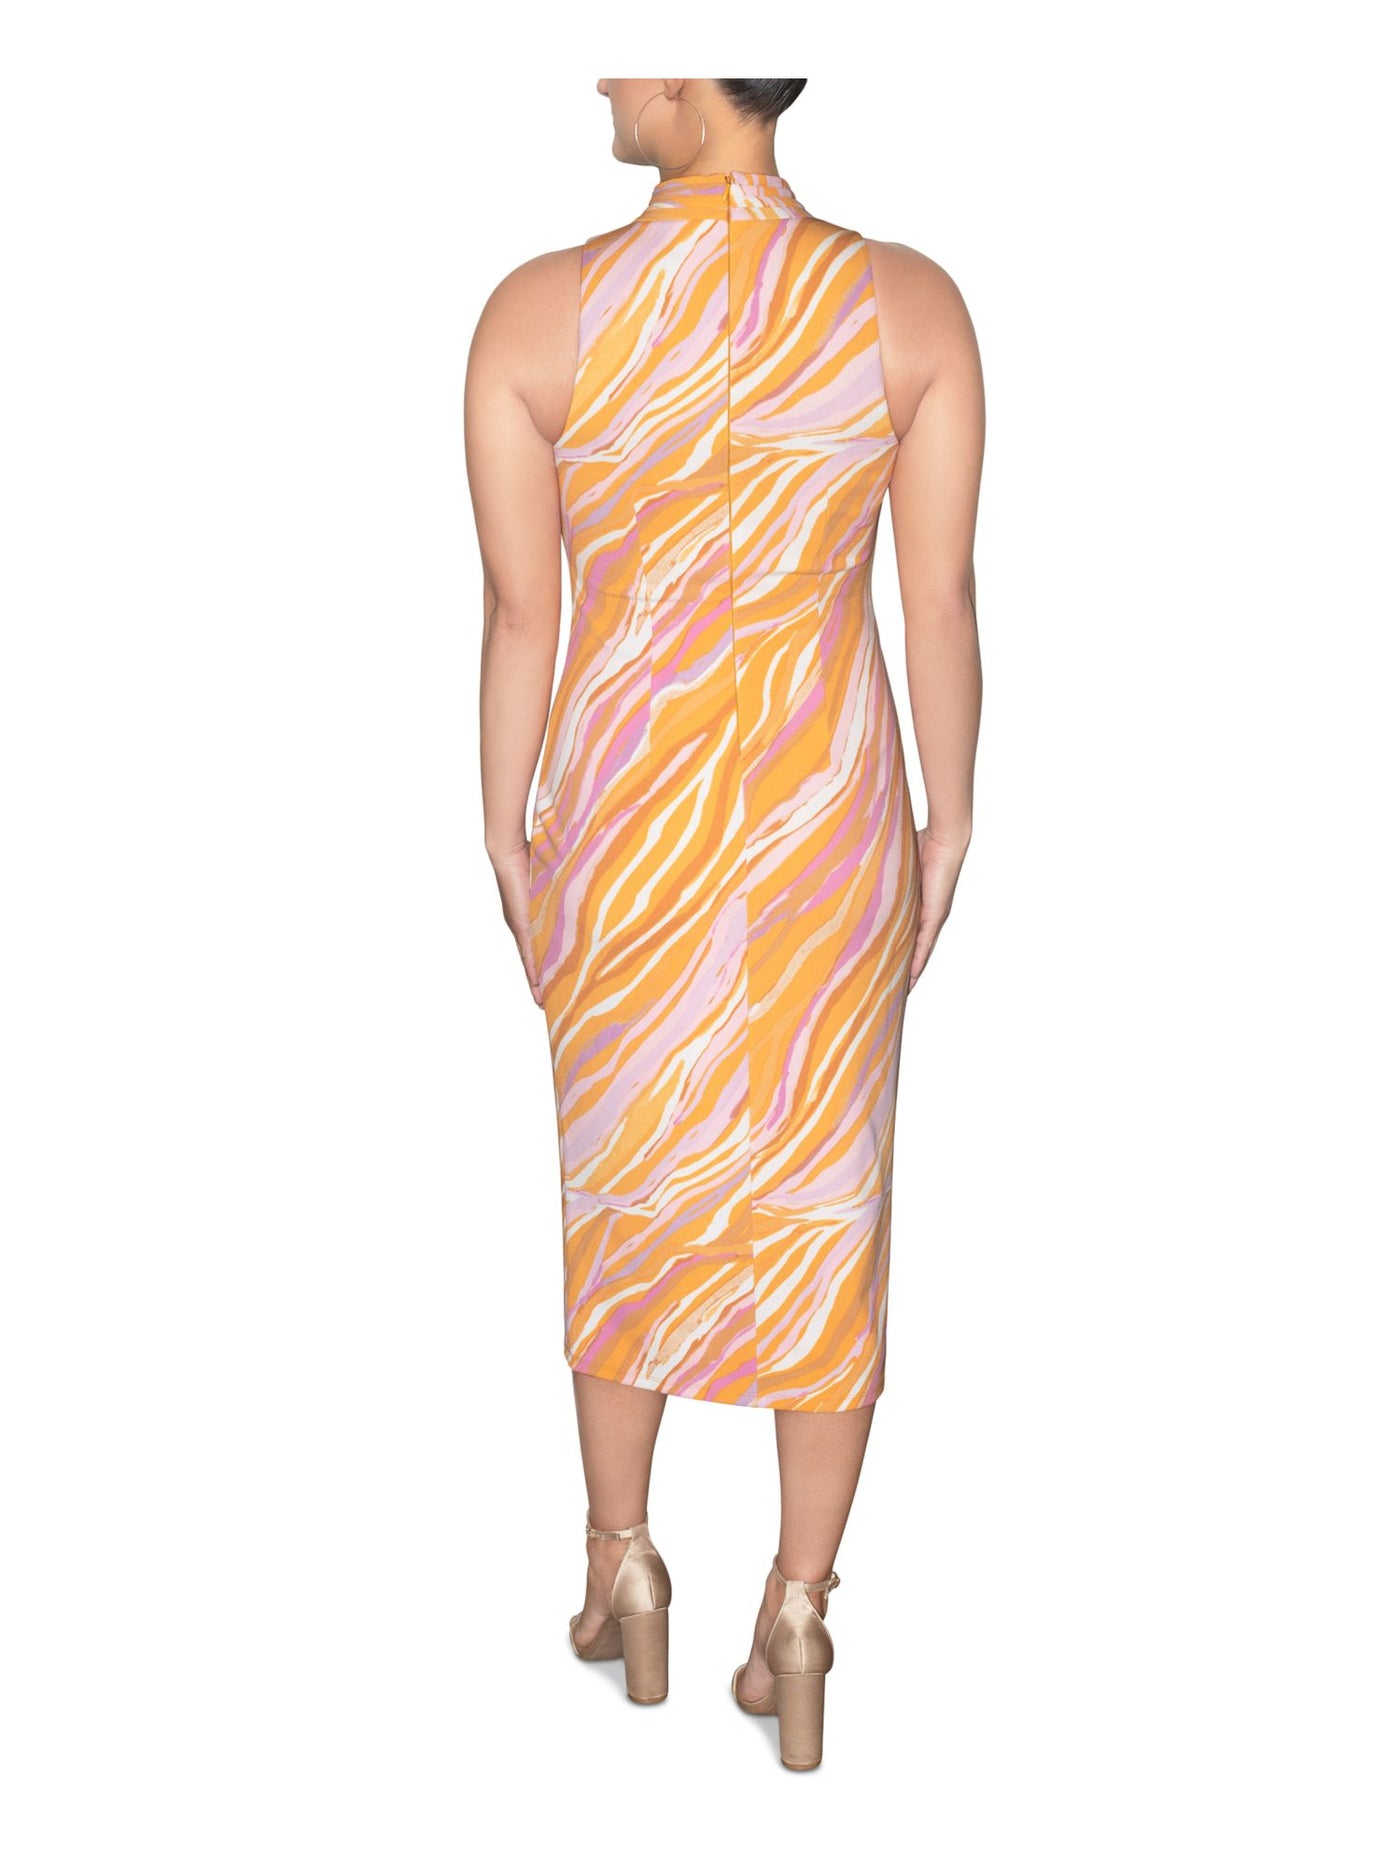 RACHEL RACHEL ROY Womens Orange Zippered Cut Out Pleated Crossover Printed Sleeveless Mock Neck Midi Evening Sheath Dress XS